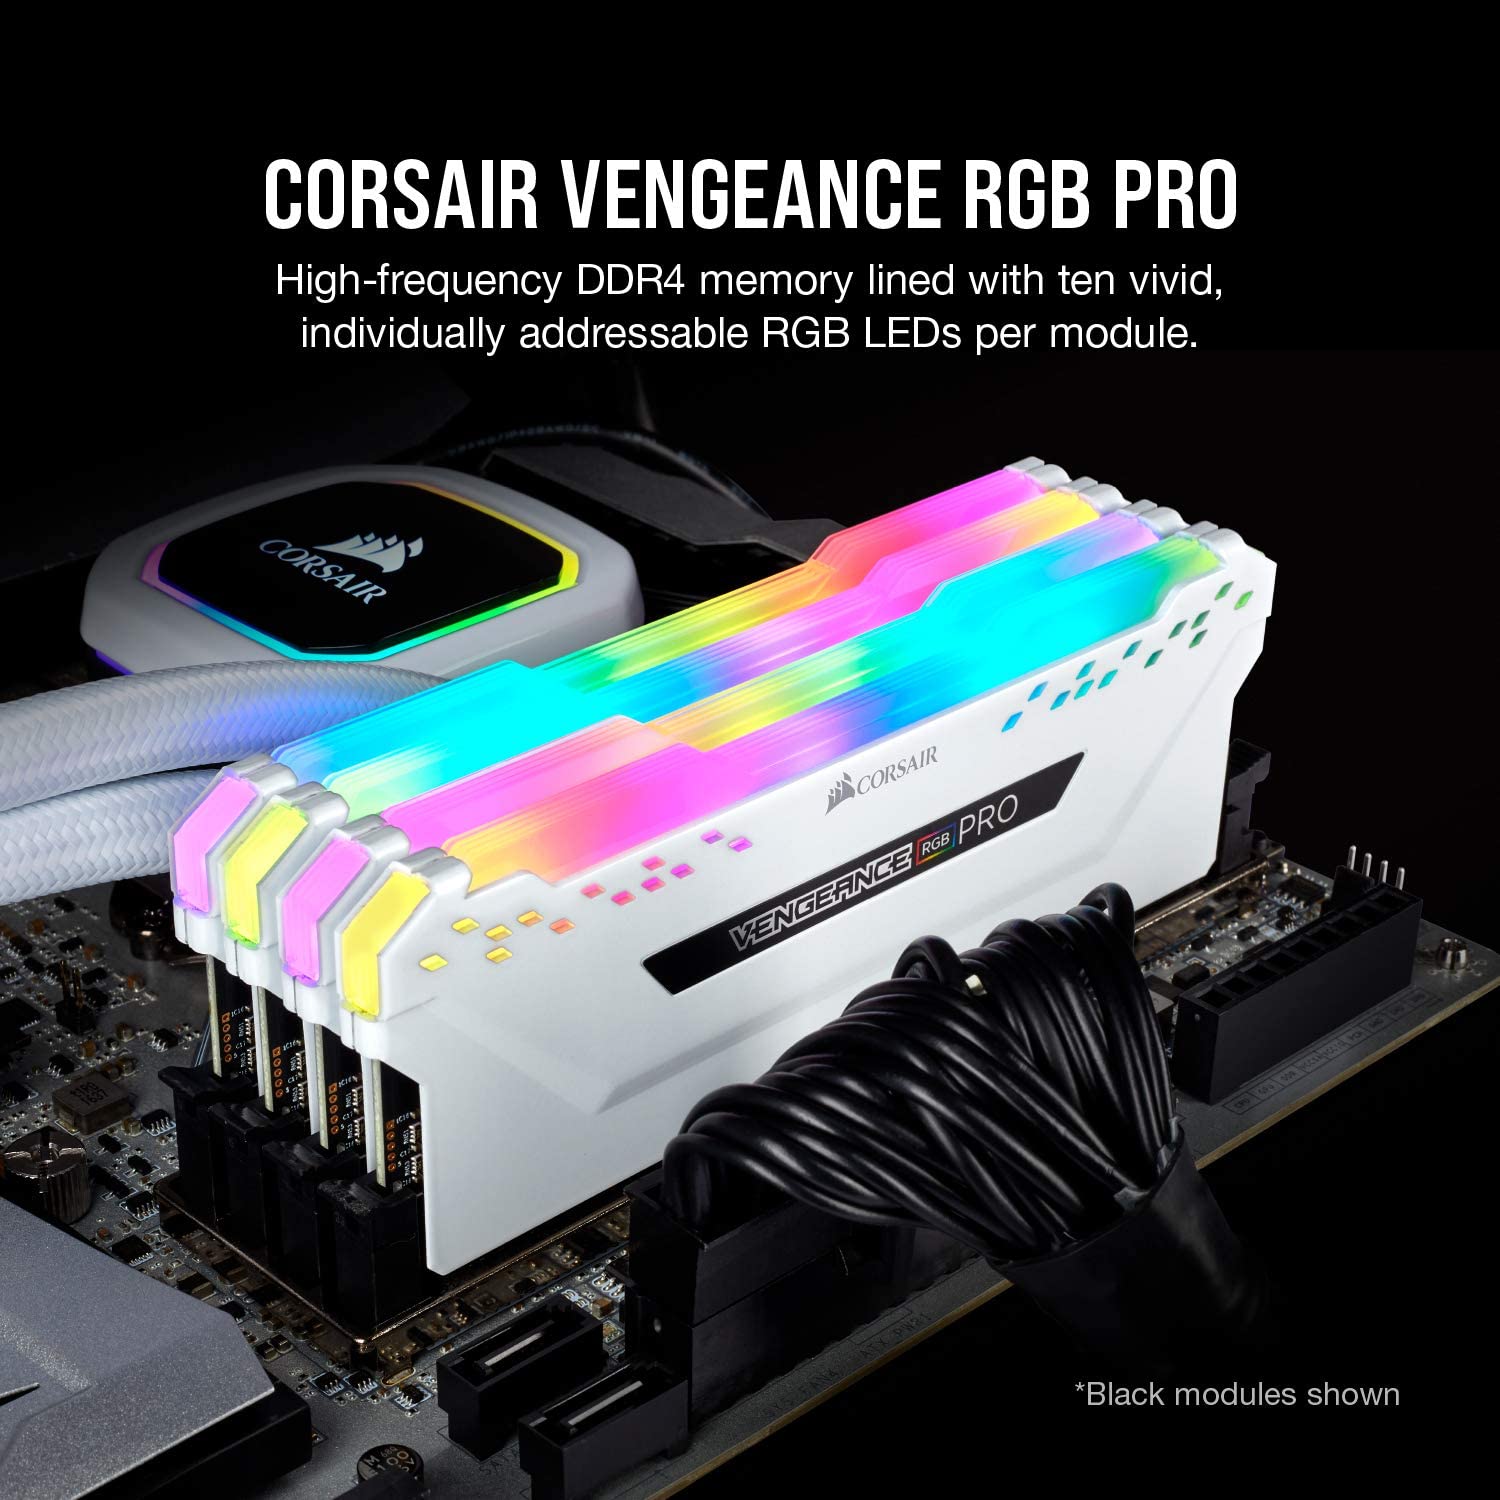 Corsair Vengeance RGB PRO 16 GB (2 x 8 GB) DDR4 3200 MHz C16 XMP 2.0 Enthusiast RGB LED Illuminated Memory Kit - White